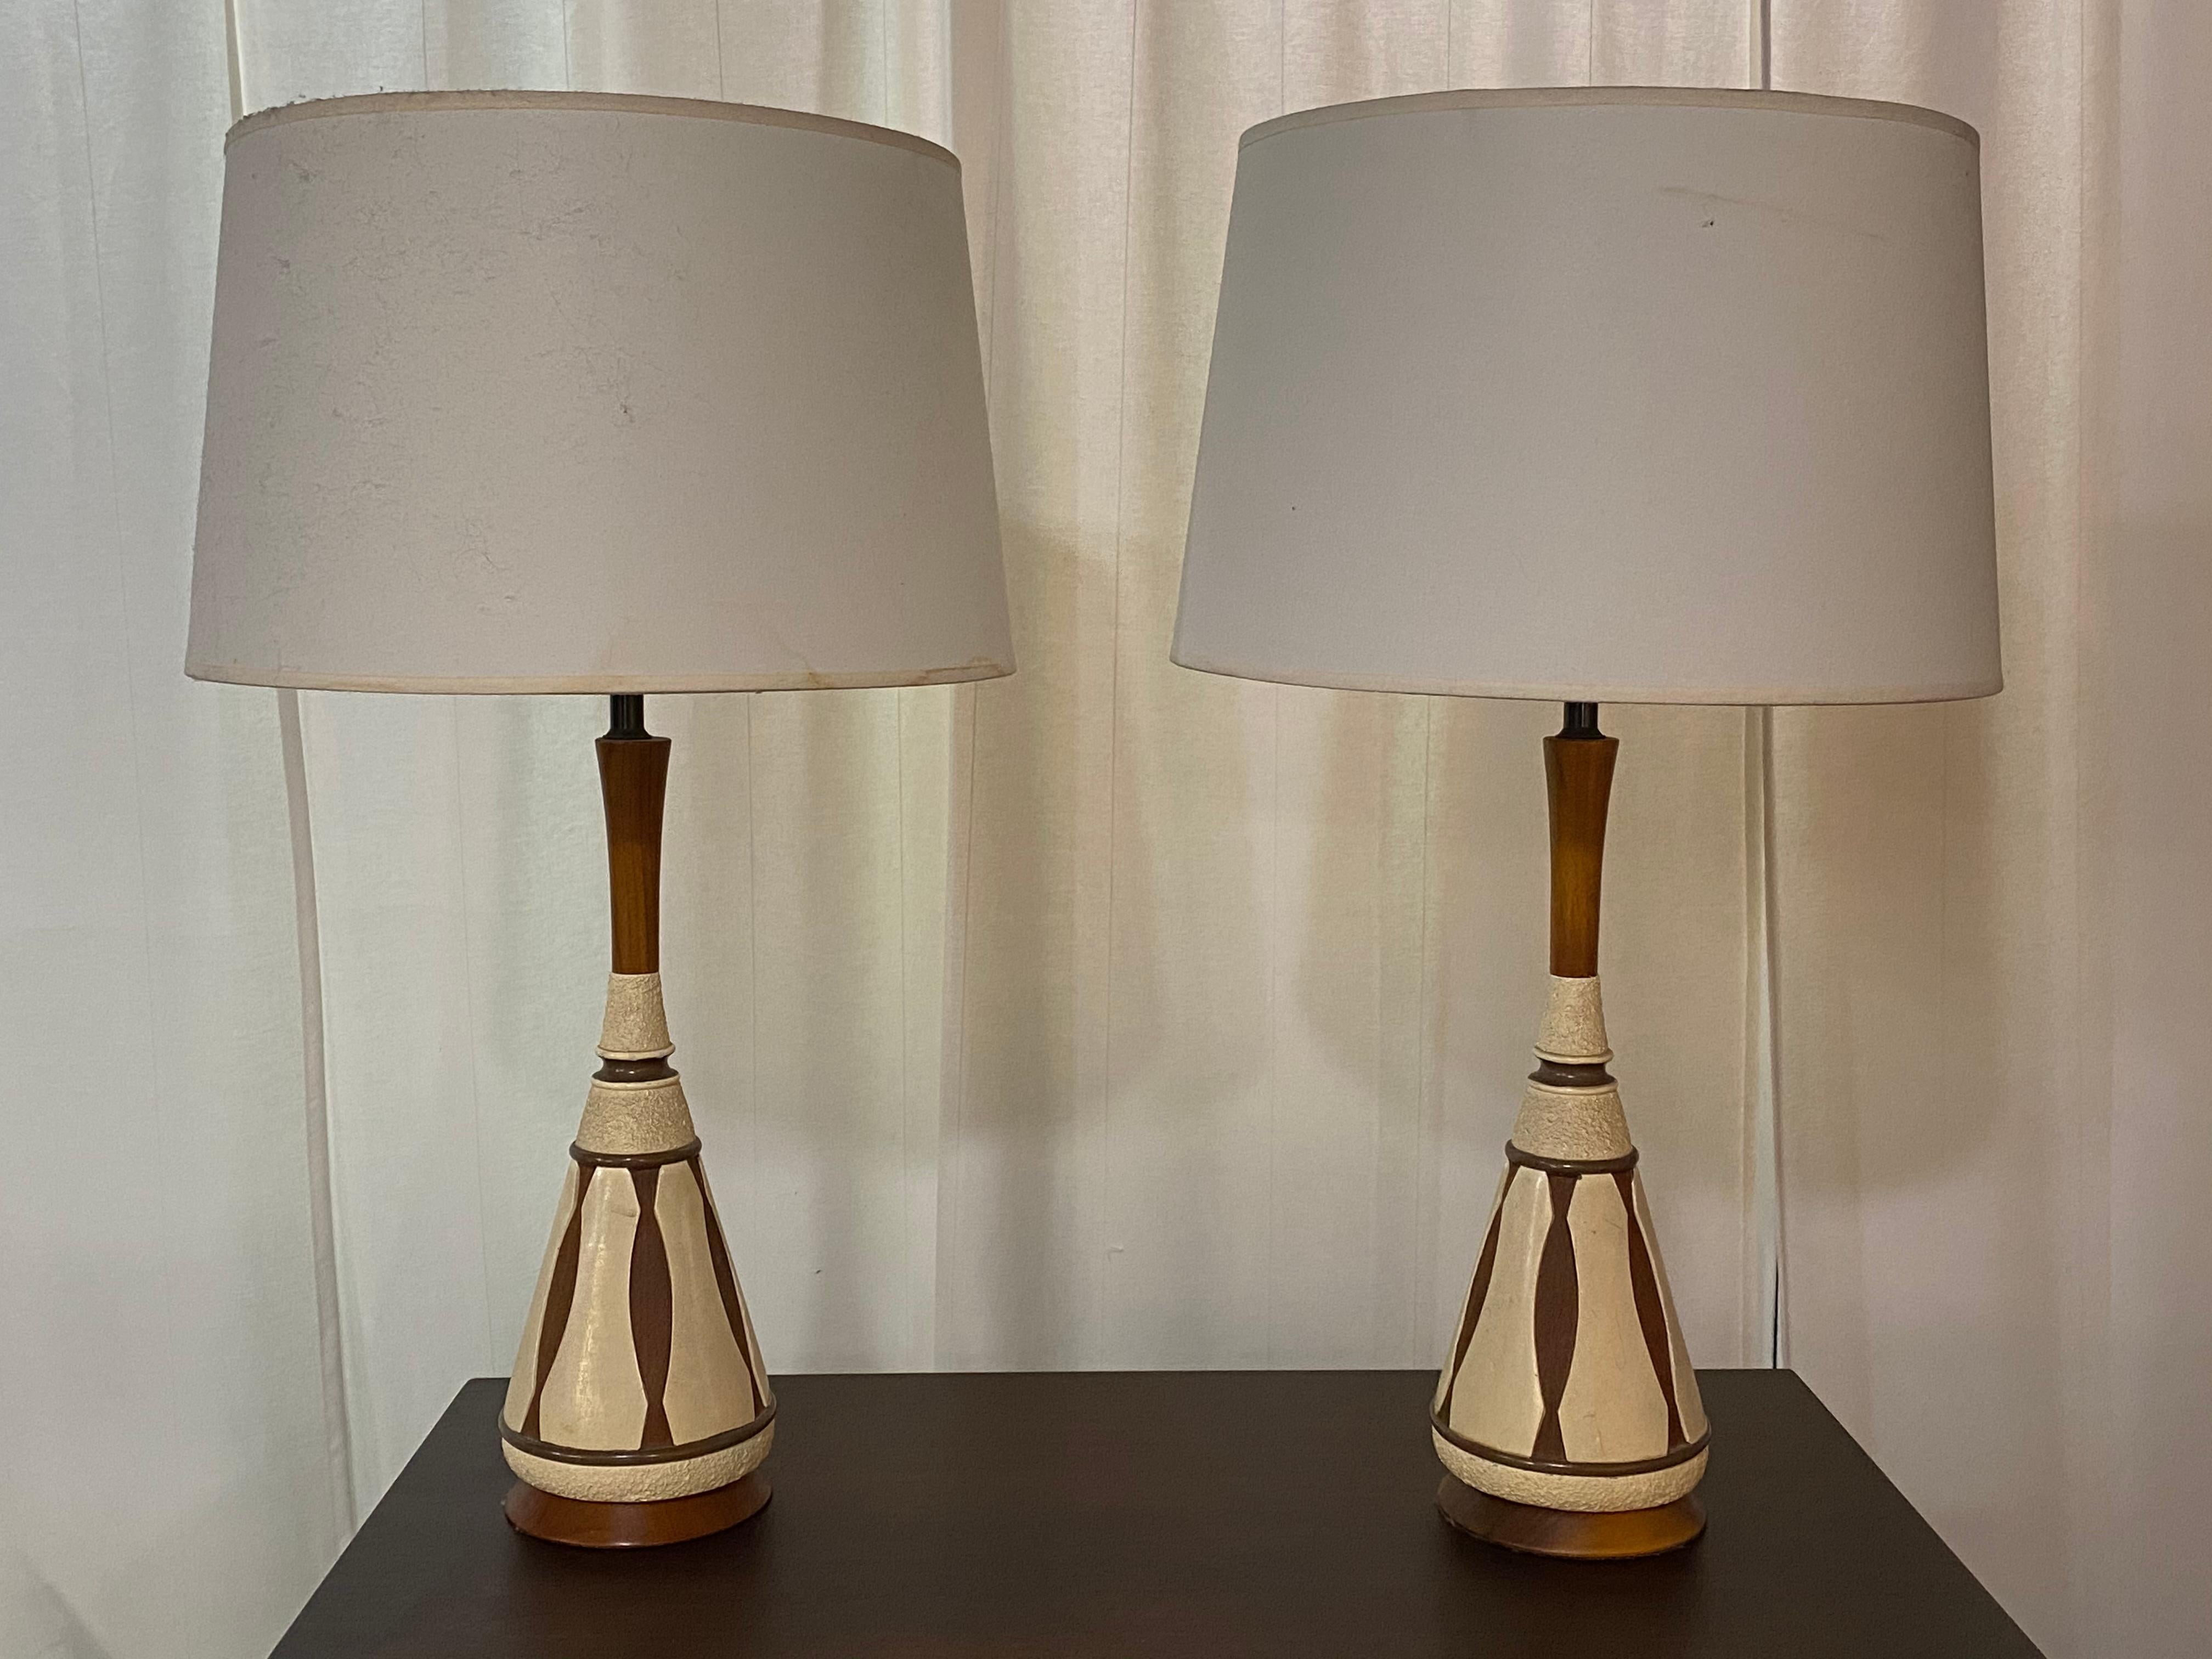 20th Century Mid-Century Modern Danish Style Table Lamps of Teak and Ceramic